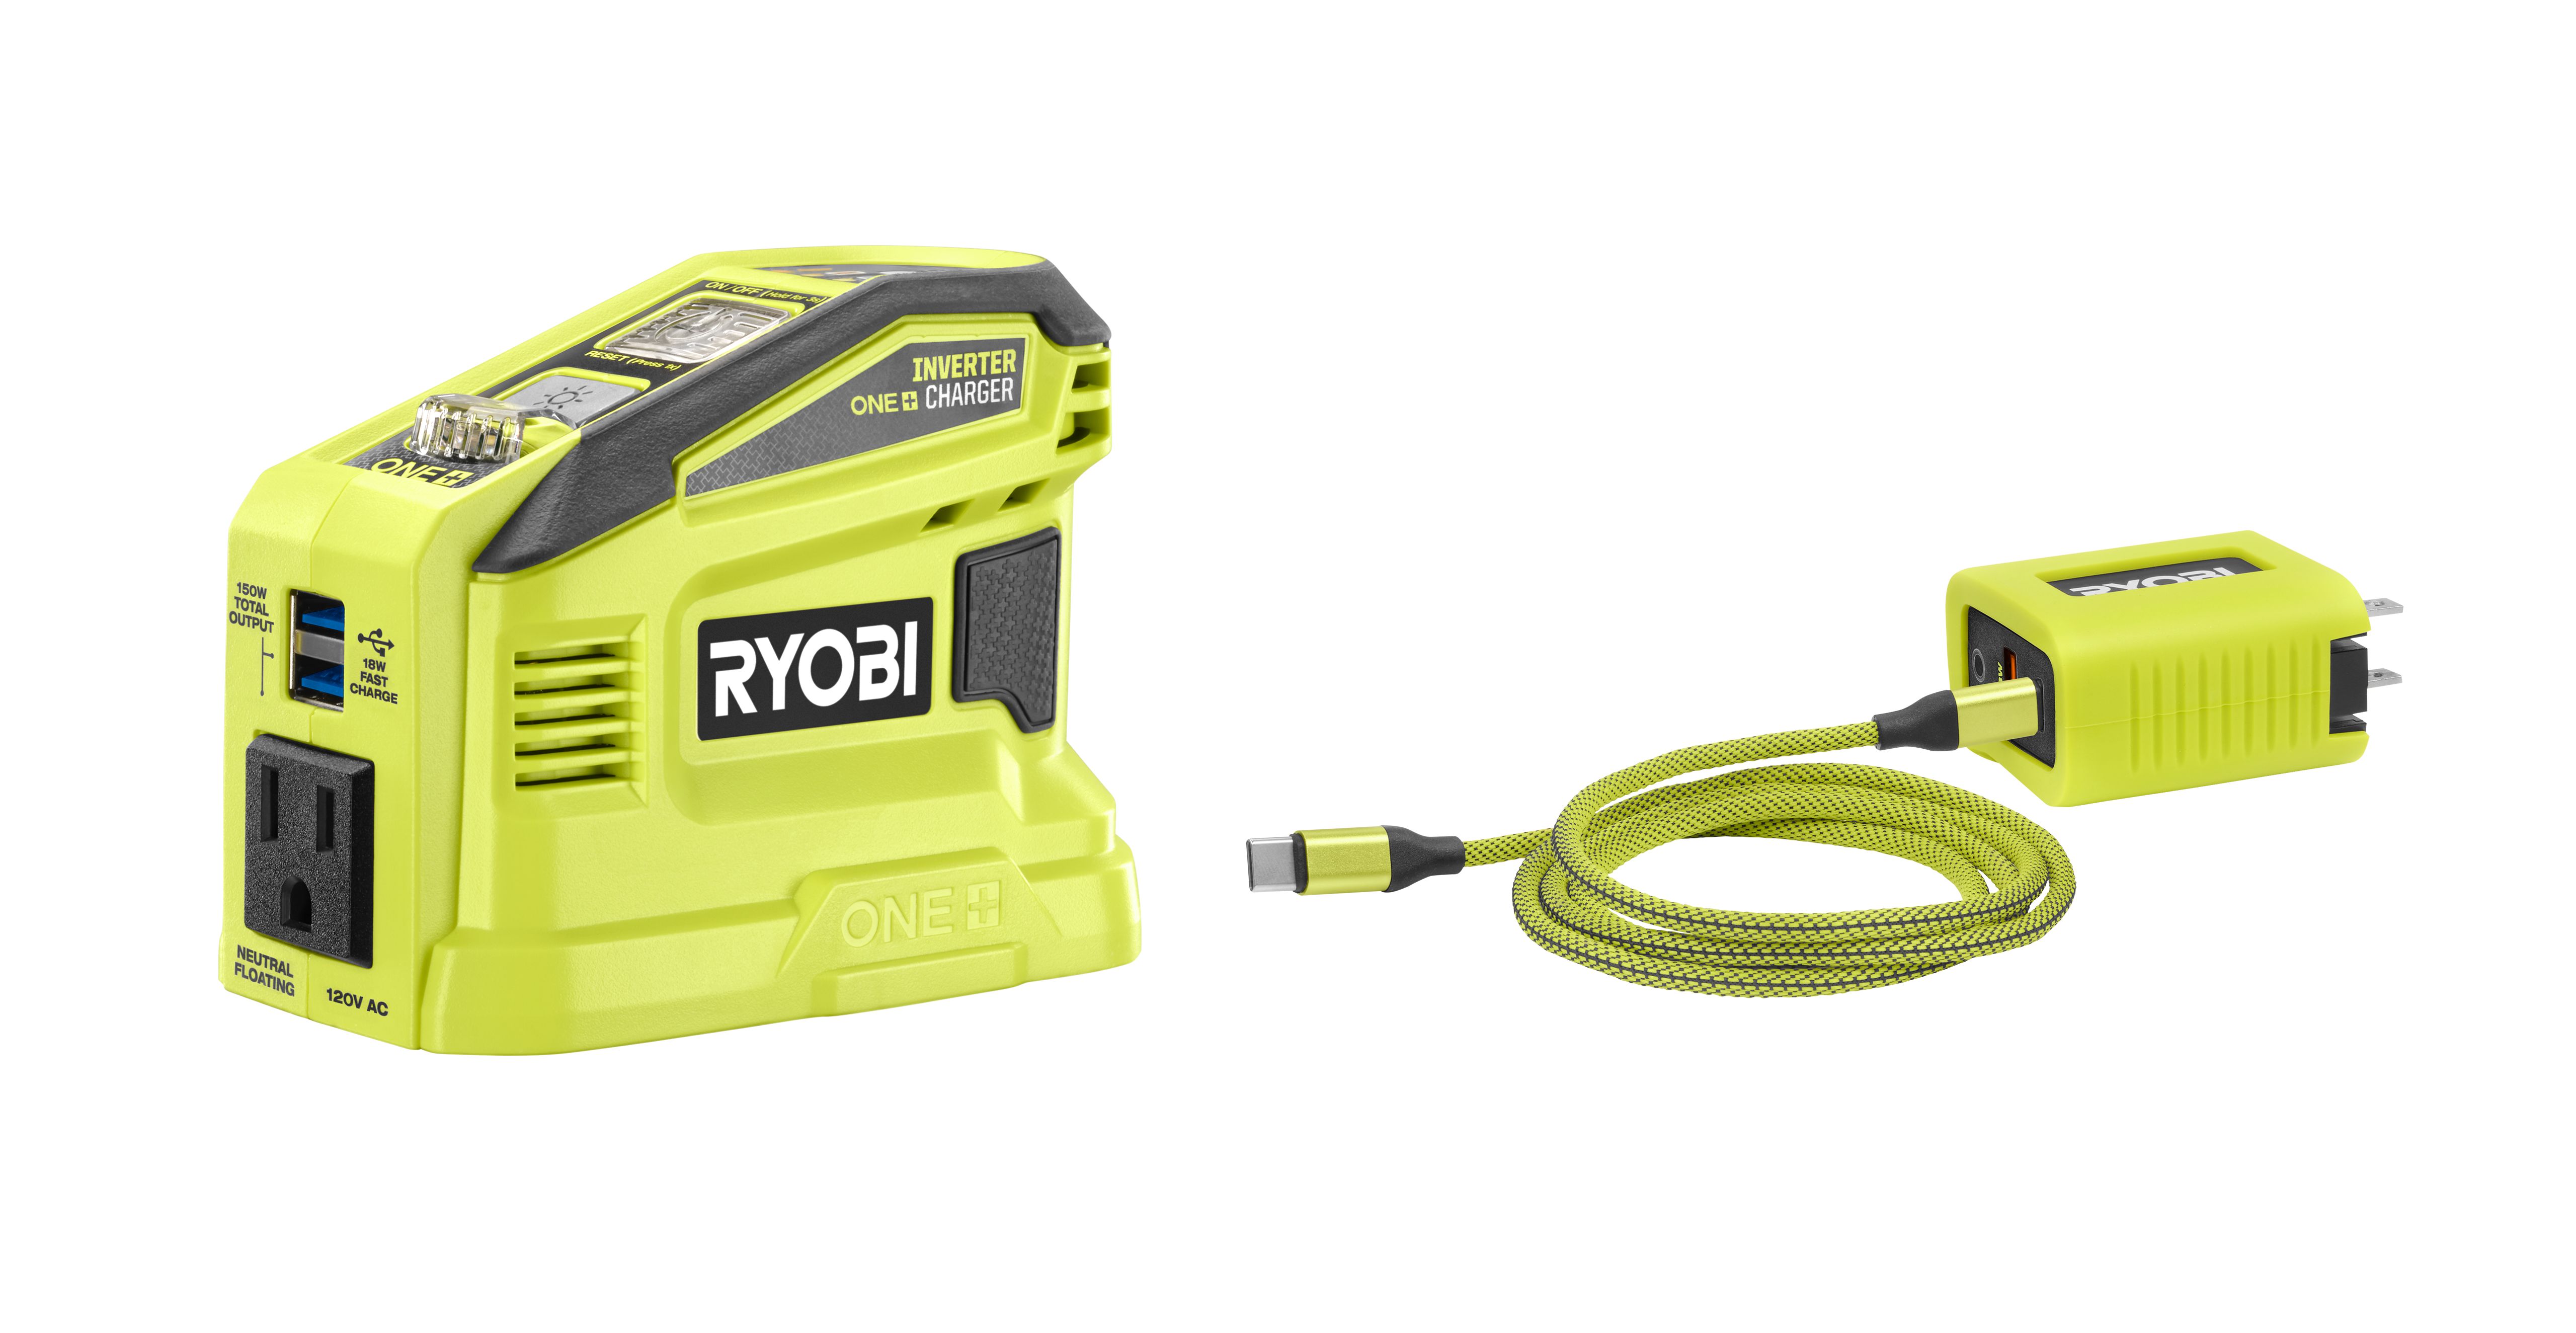 RYOBI 18V ONE+ 150 Watt Power Source and Charger Kit